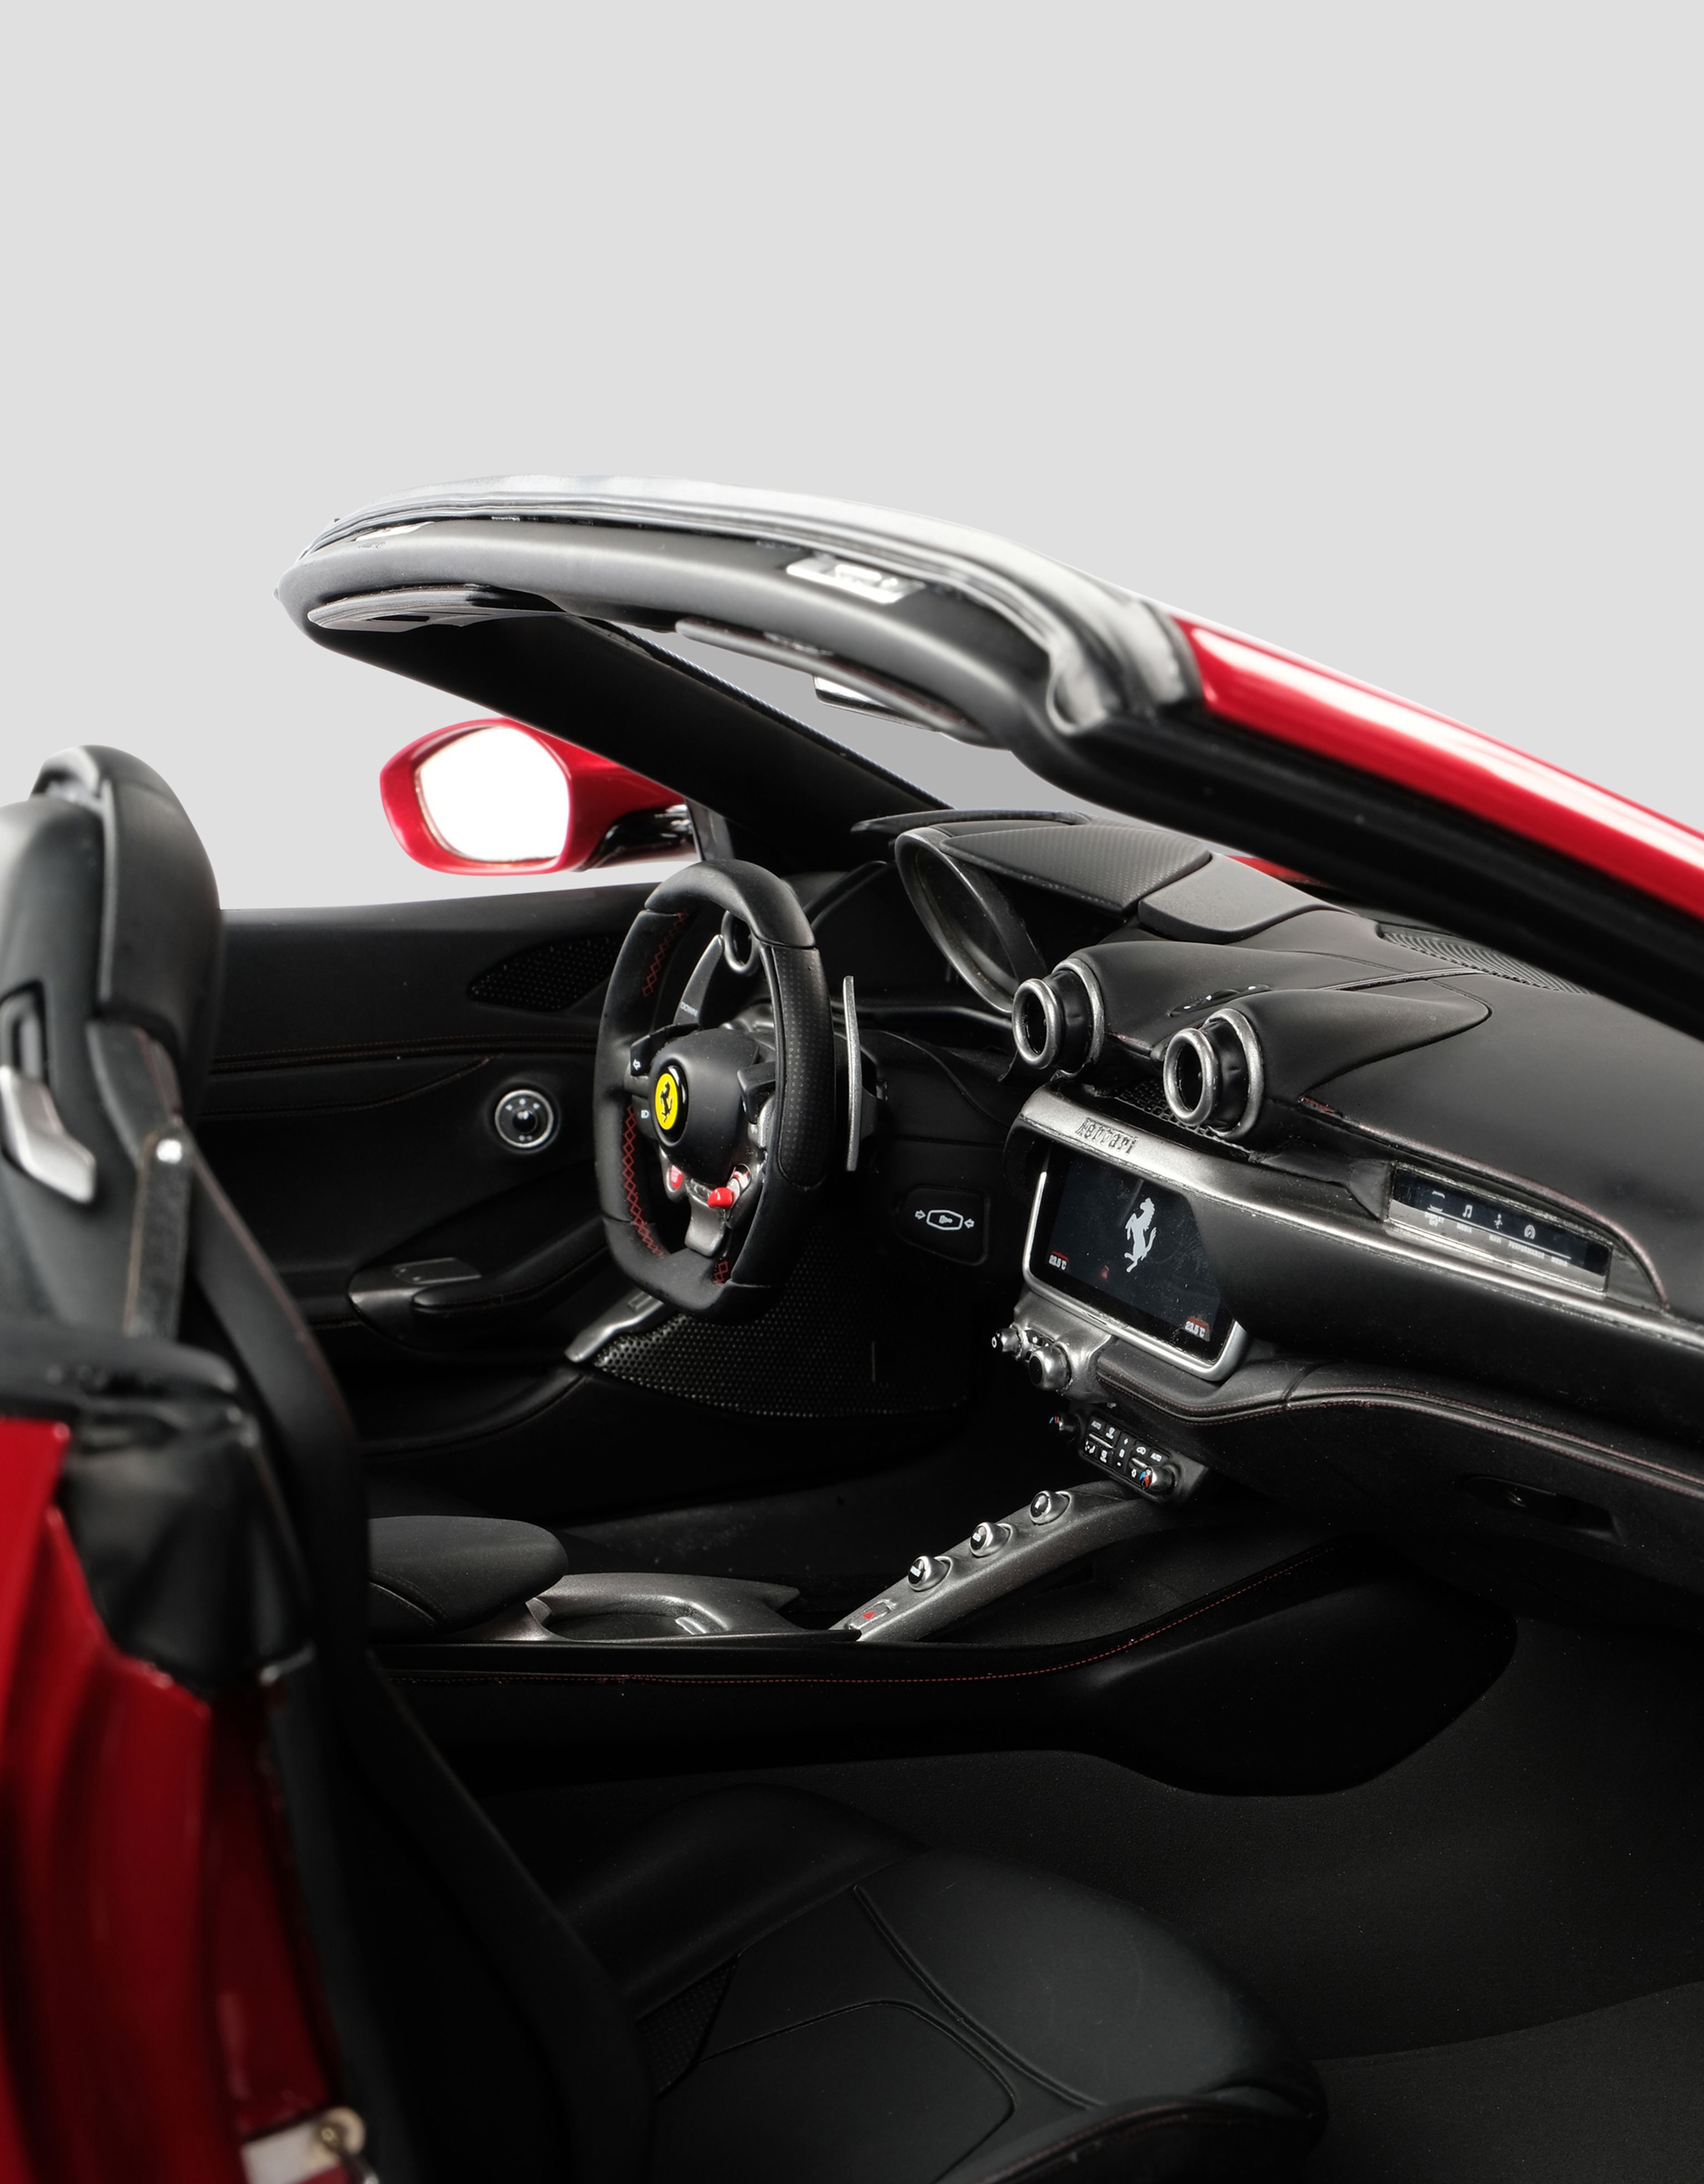 Ferrari 法拉利 Portofino 1:8 比例汽车模型 红色 L7816f